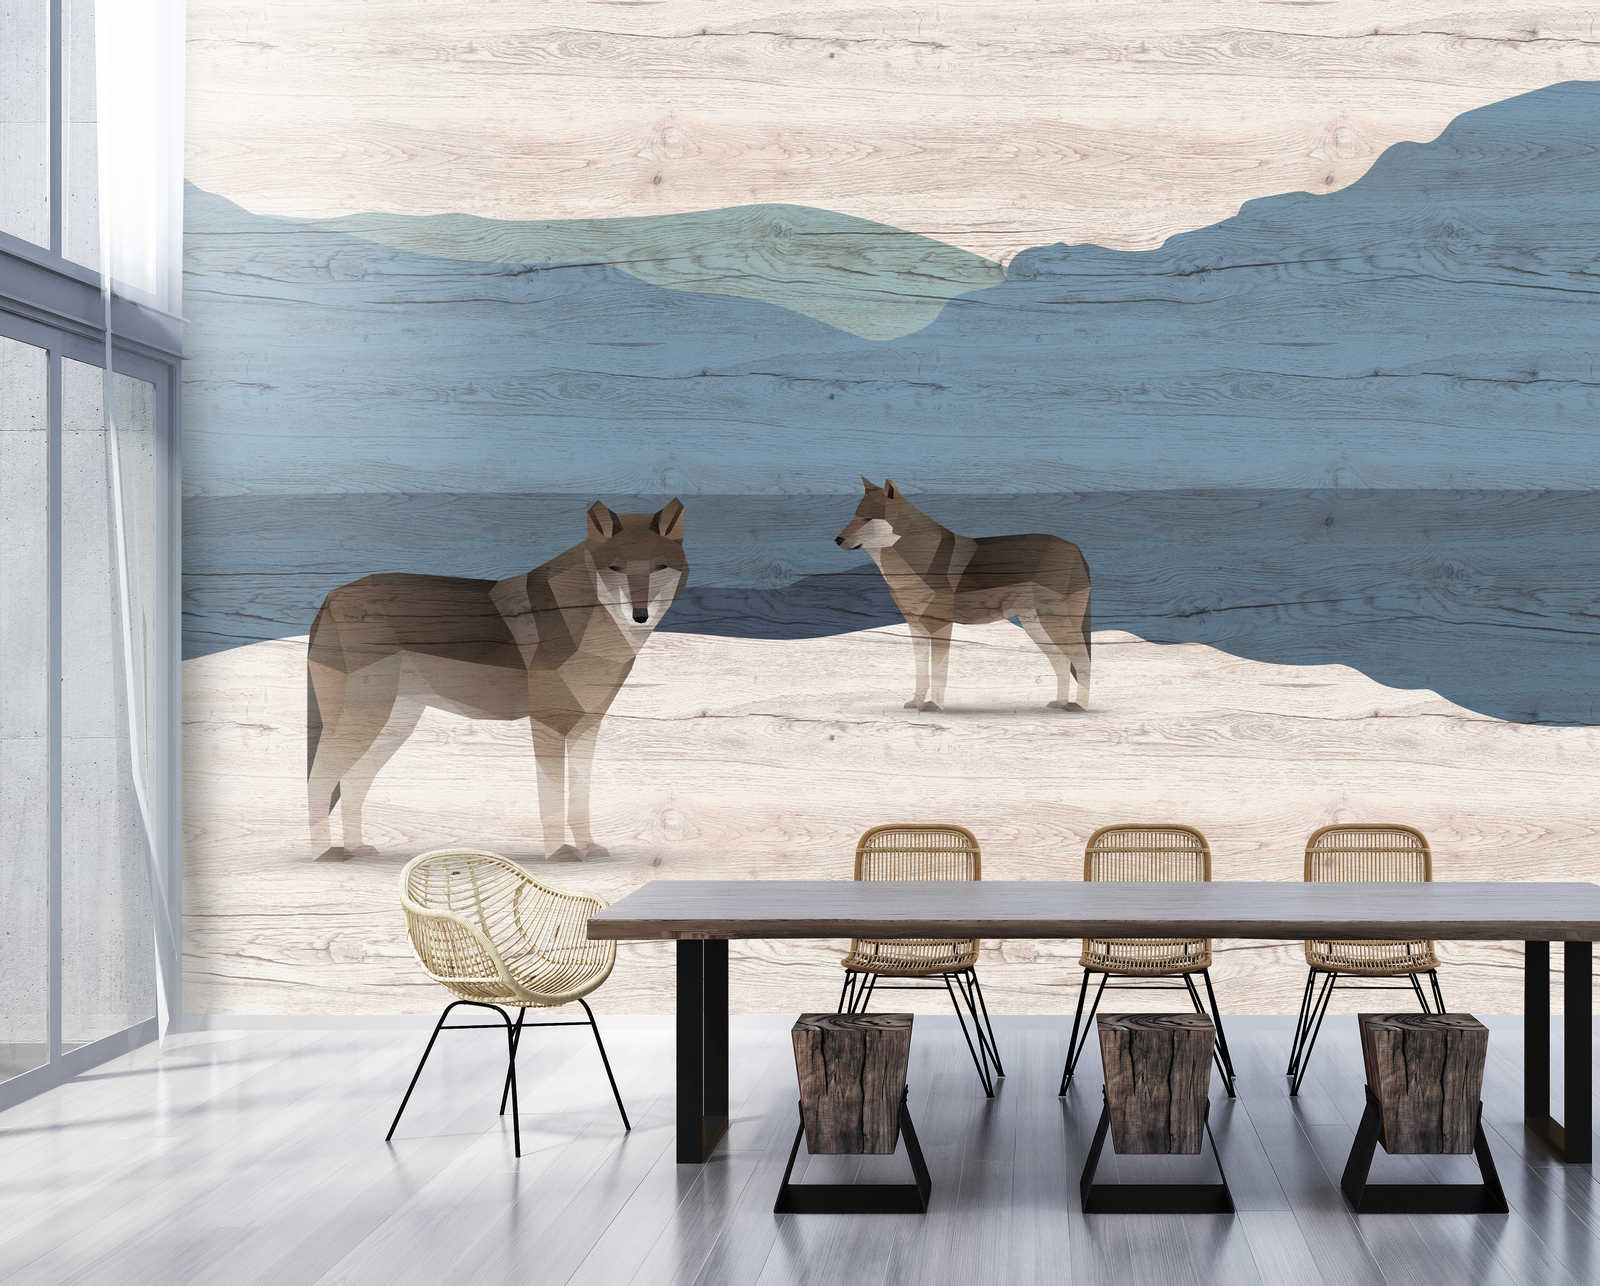             Yukon 1 – Fototapete Berge & Hunde mit Holzstruktur
        